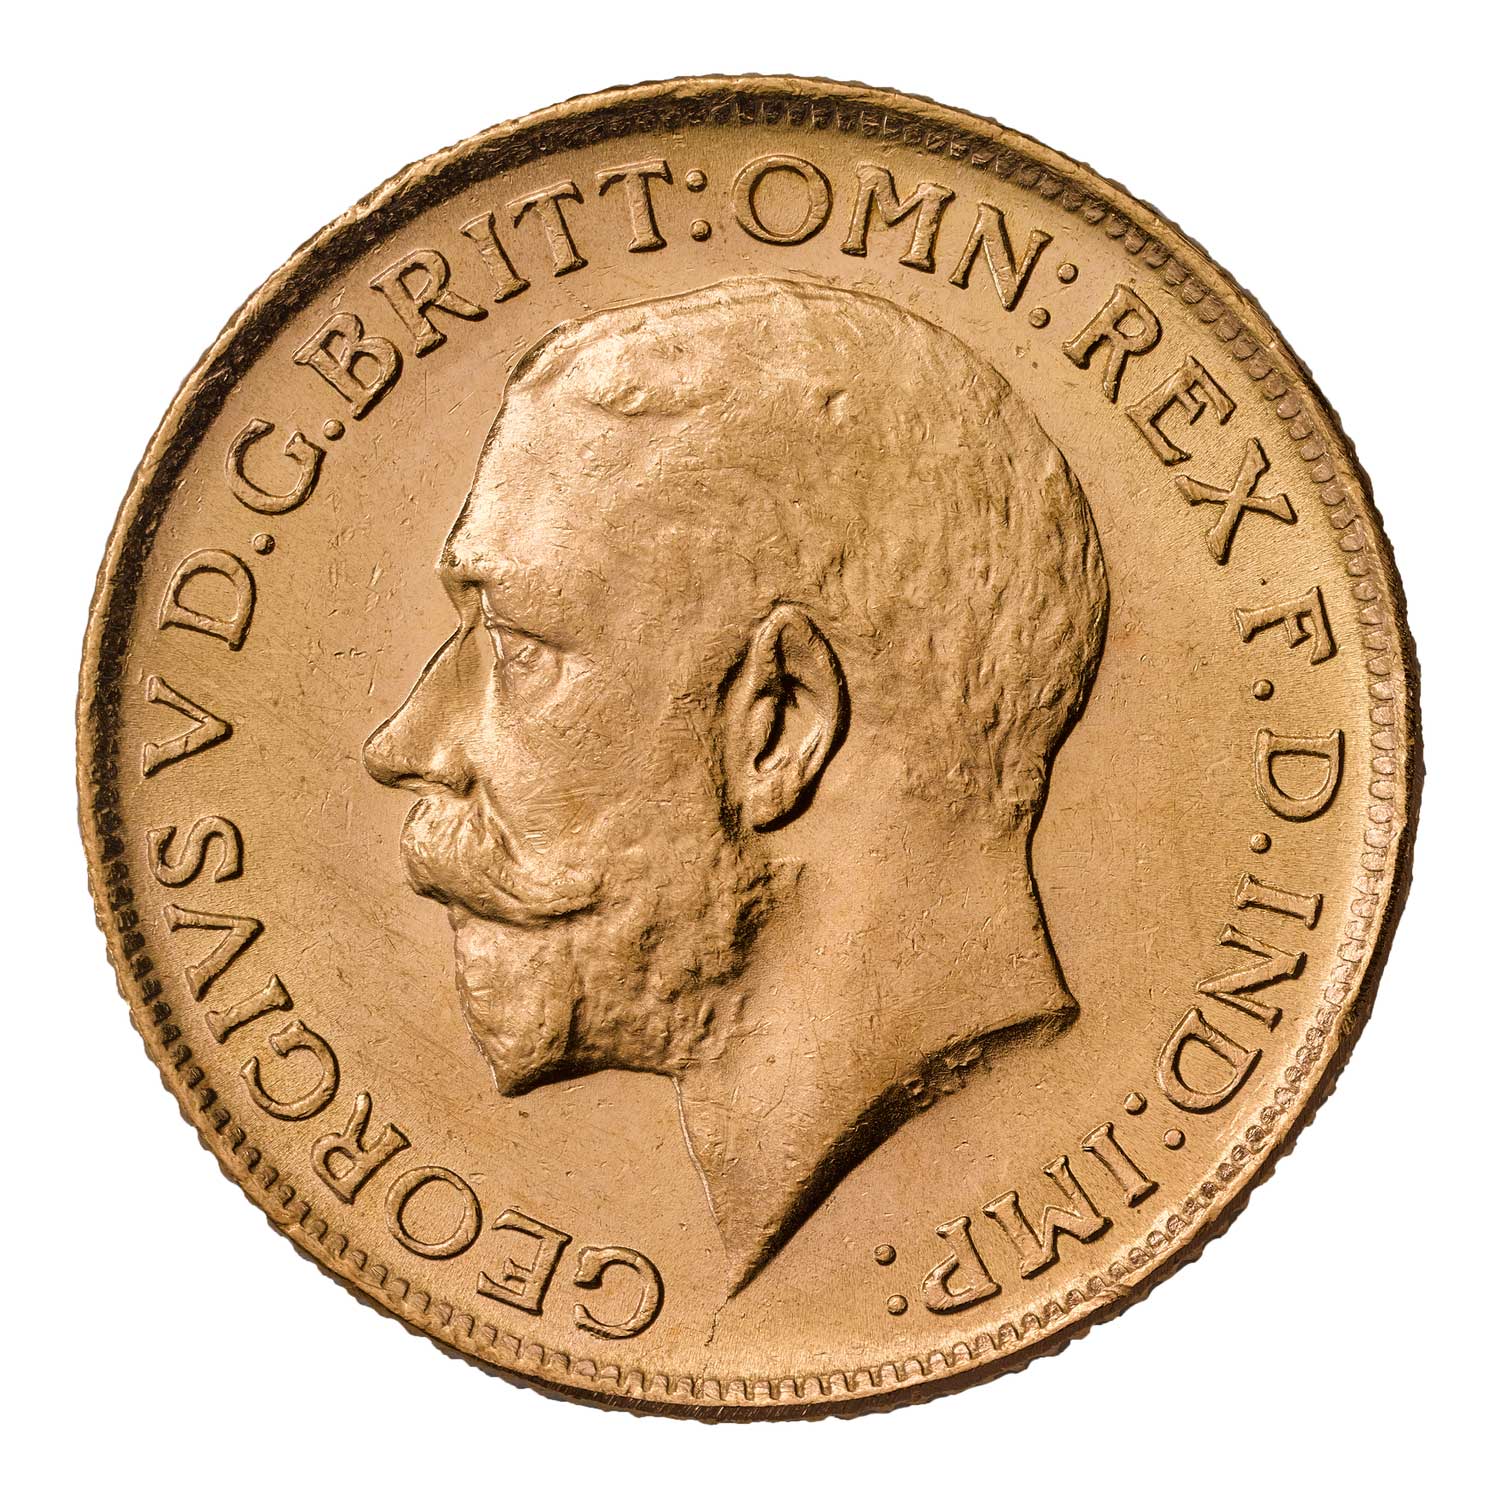 1915 George V Sovereign, Sydney Mint Mark